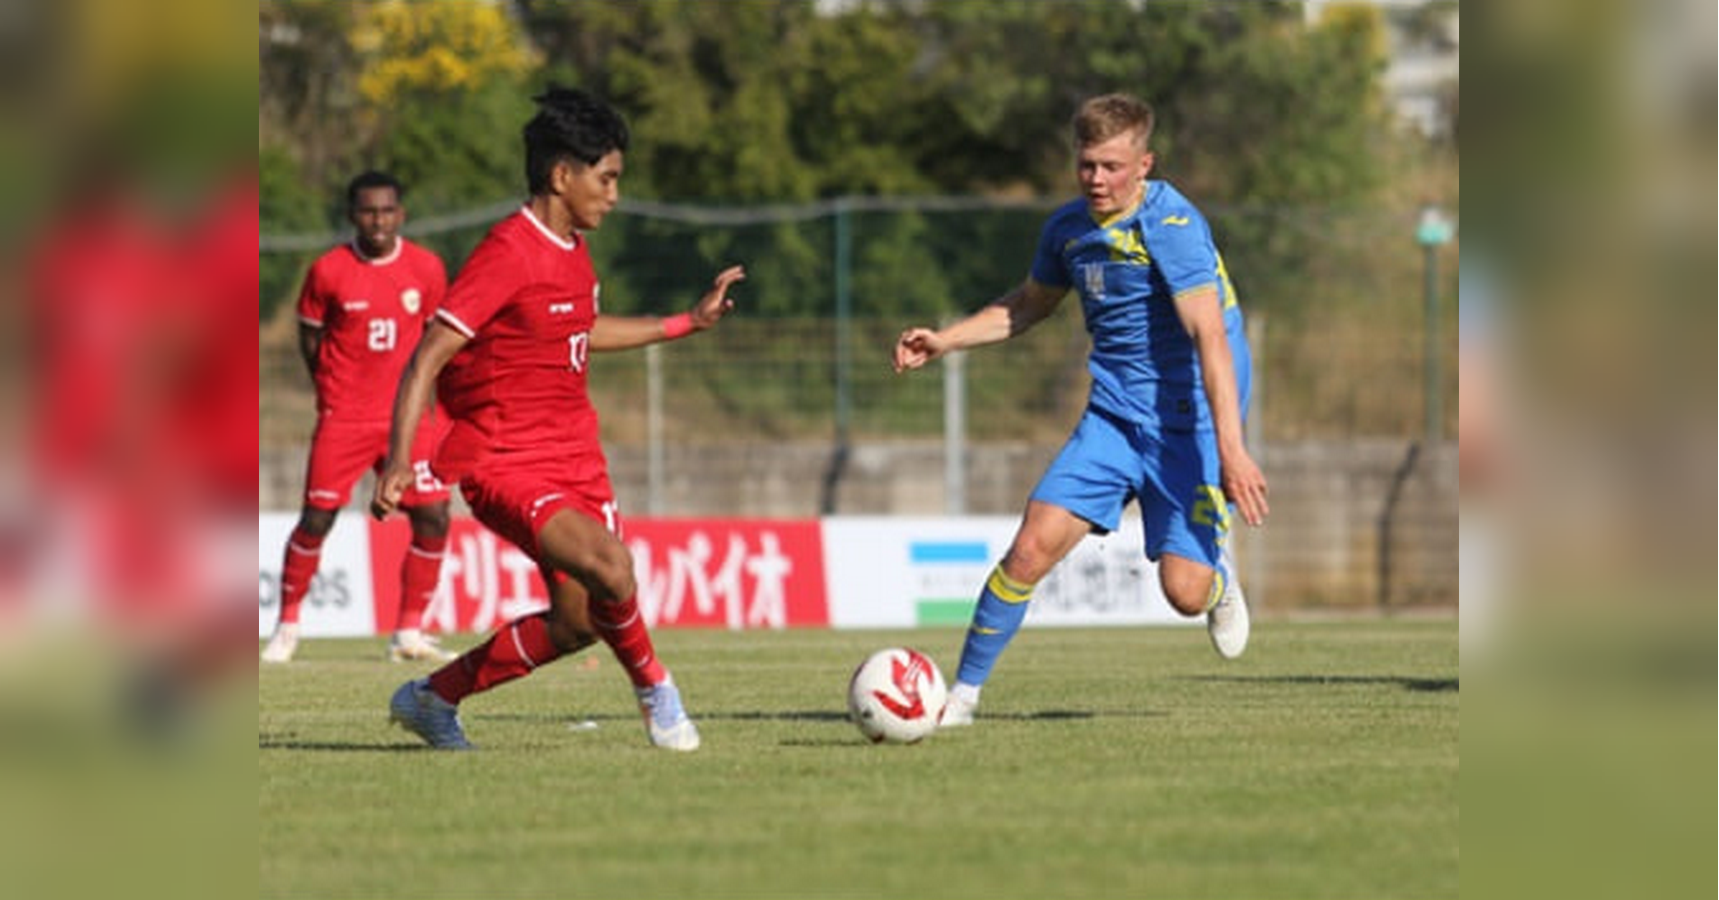 Indonesia U20 Ukraine U23 0:3 – worldwide soccer event France June 4 – video